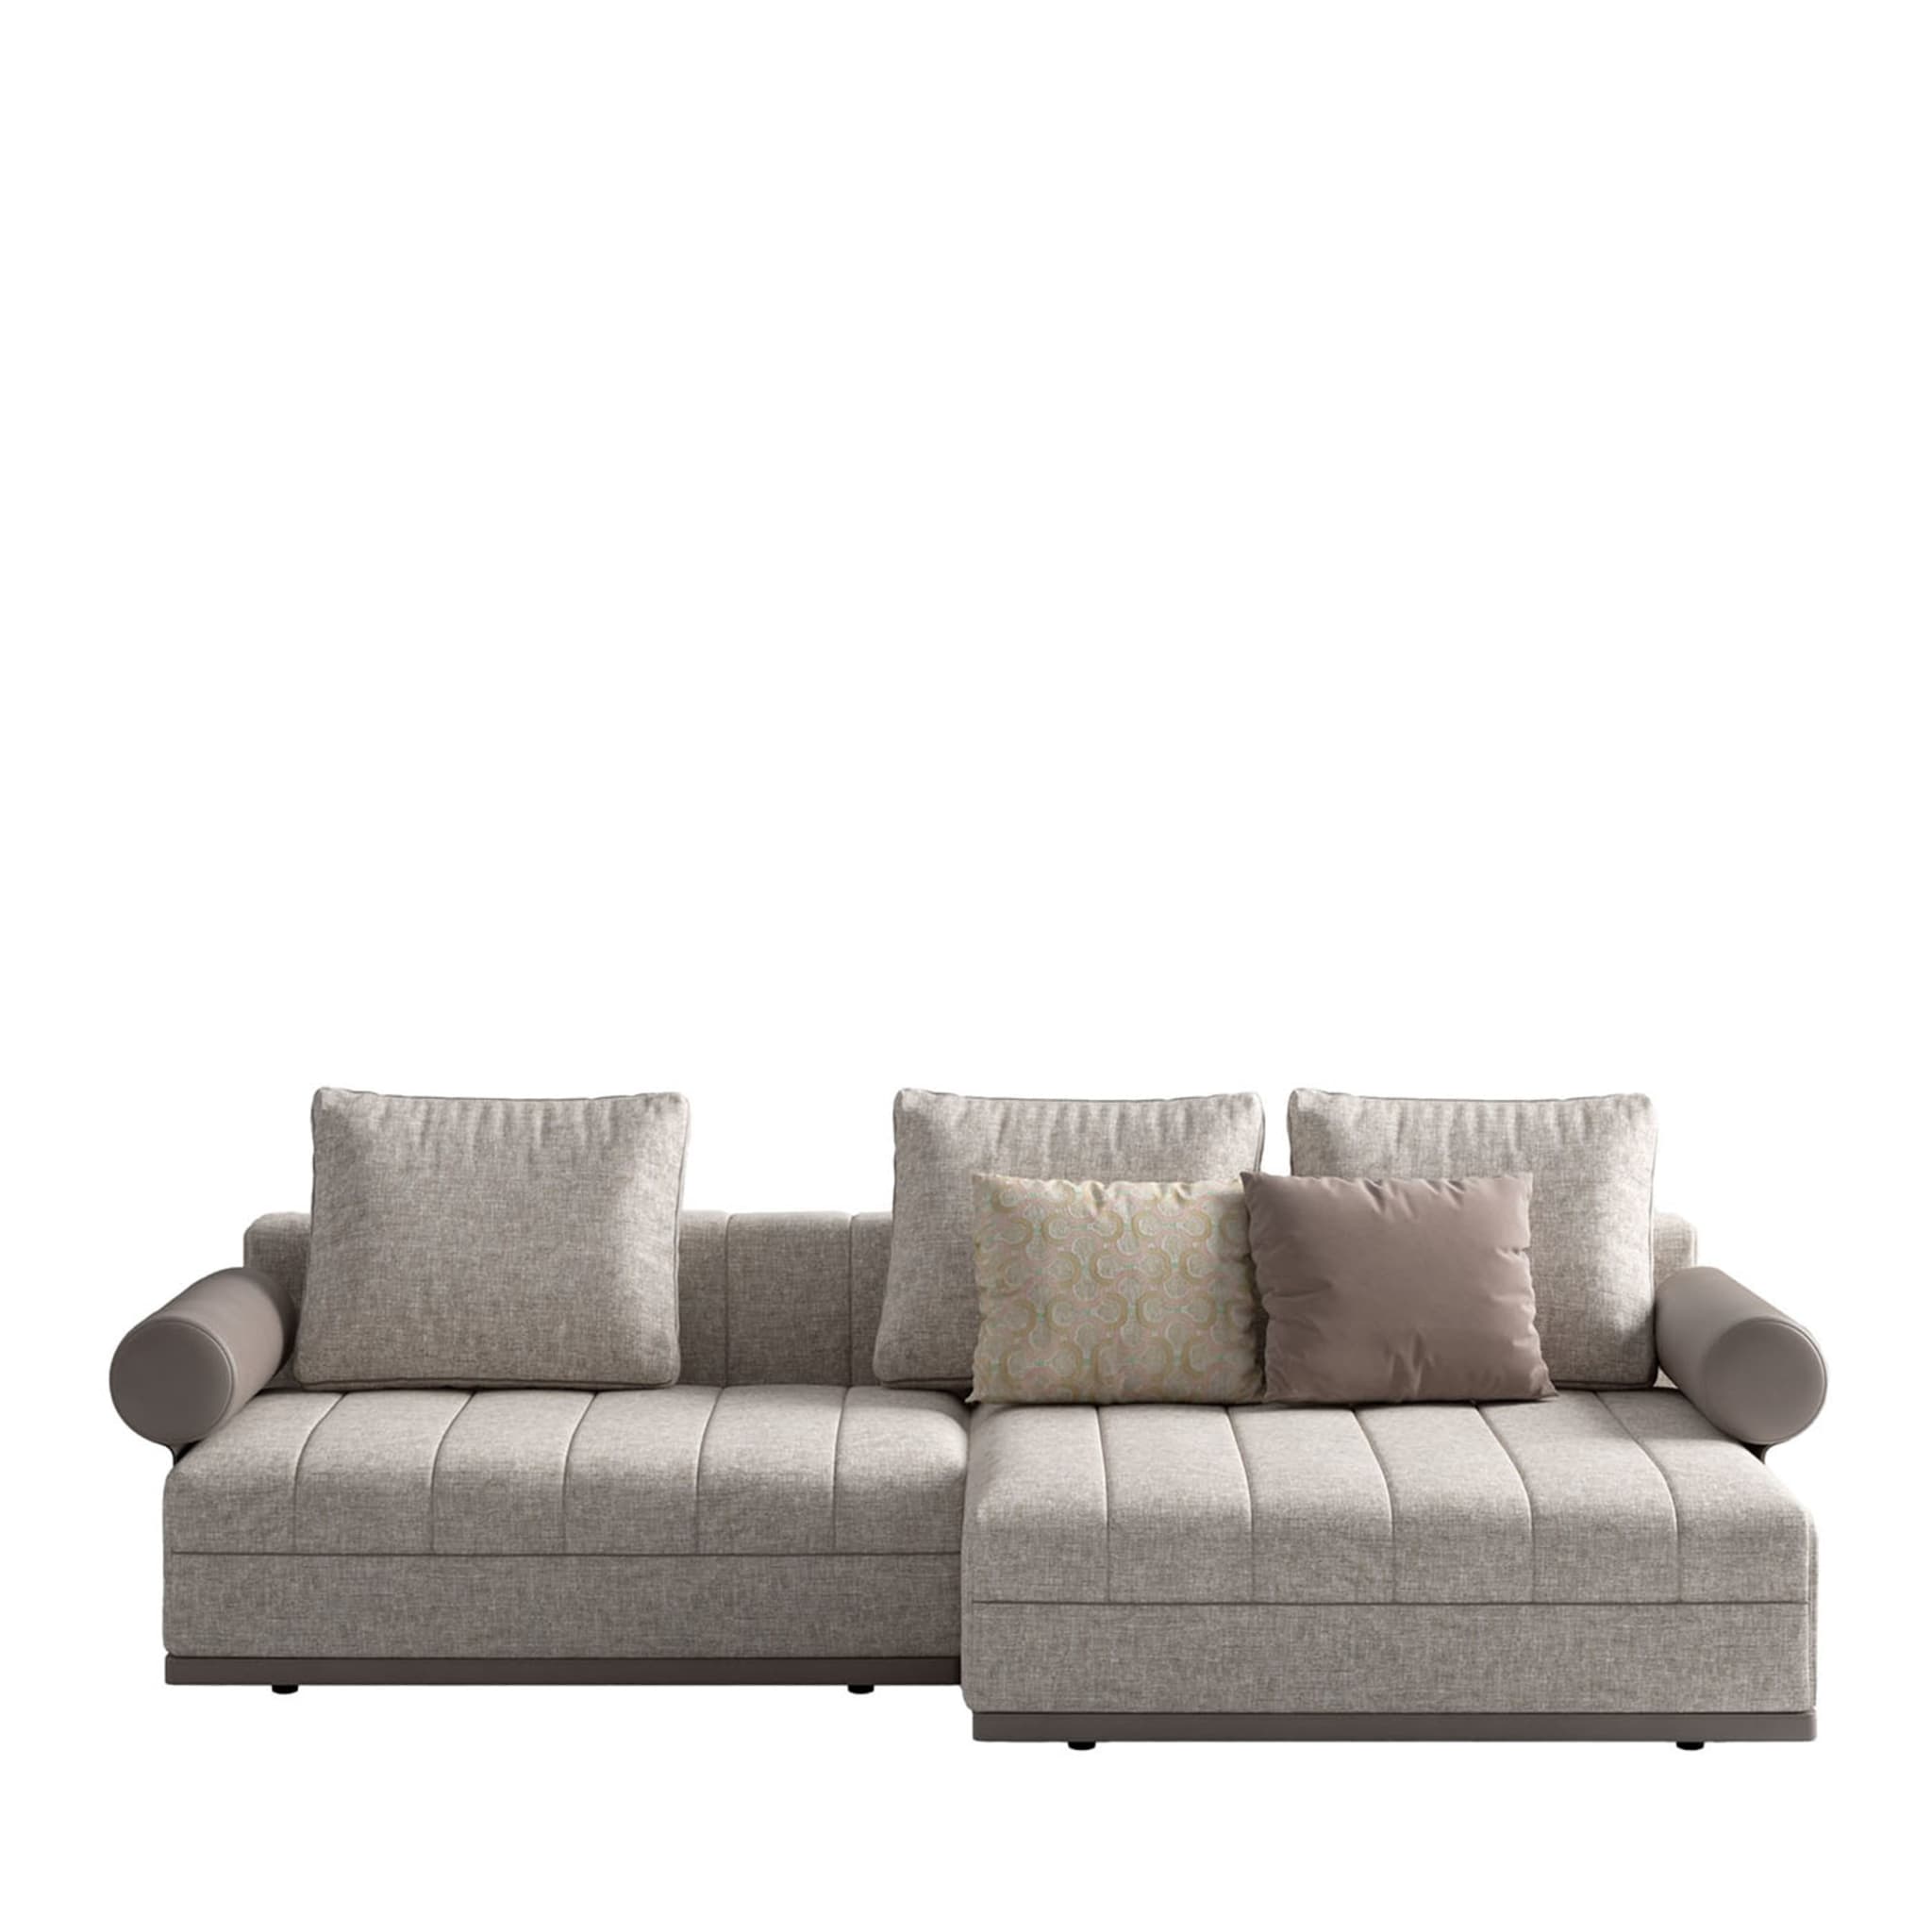 Gray & Beige Modular Sofa - Main view